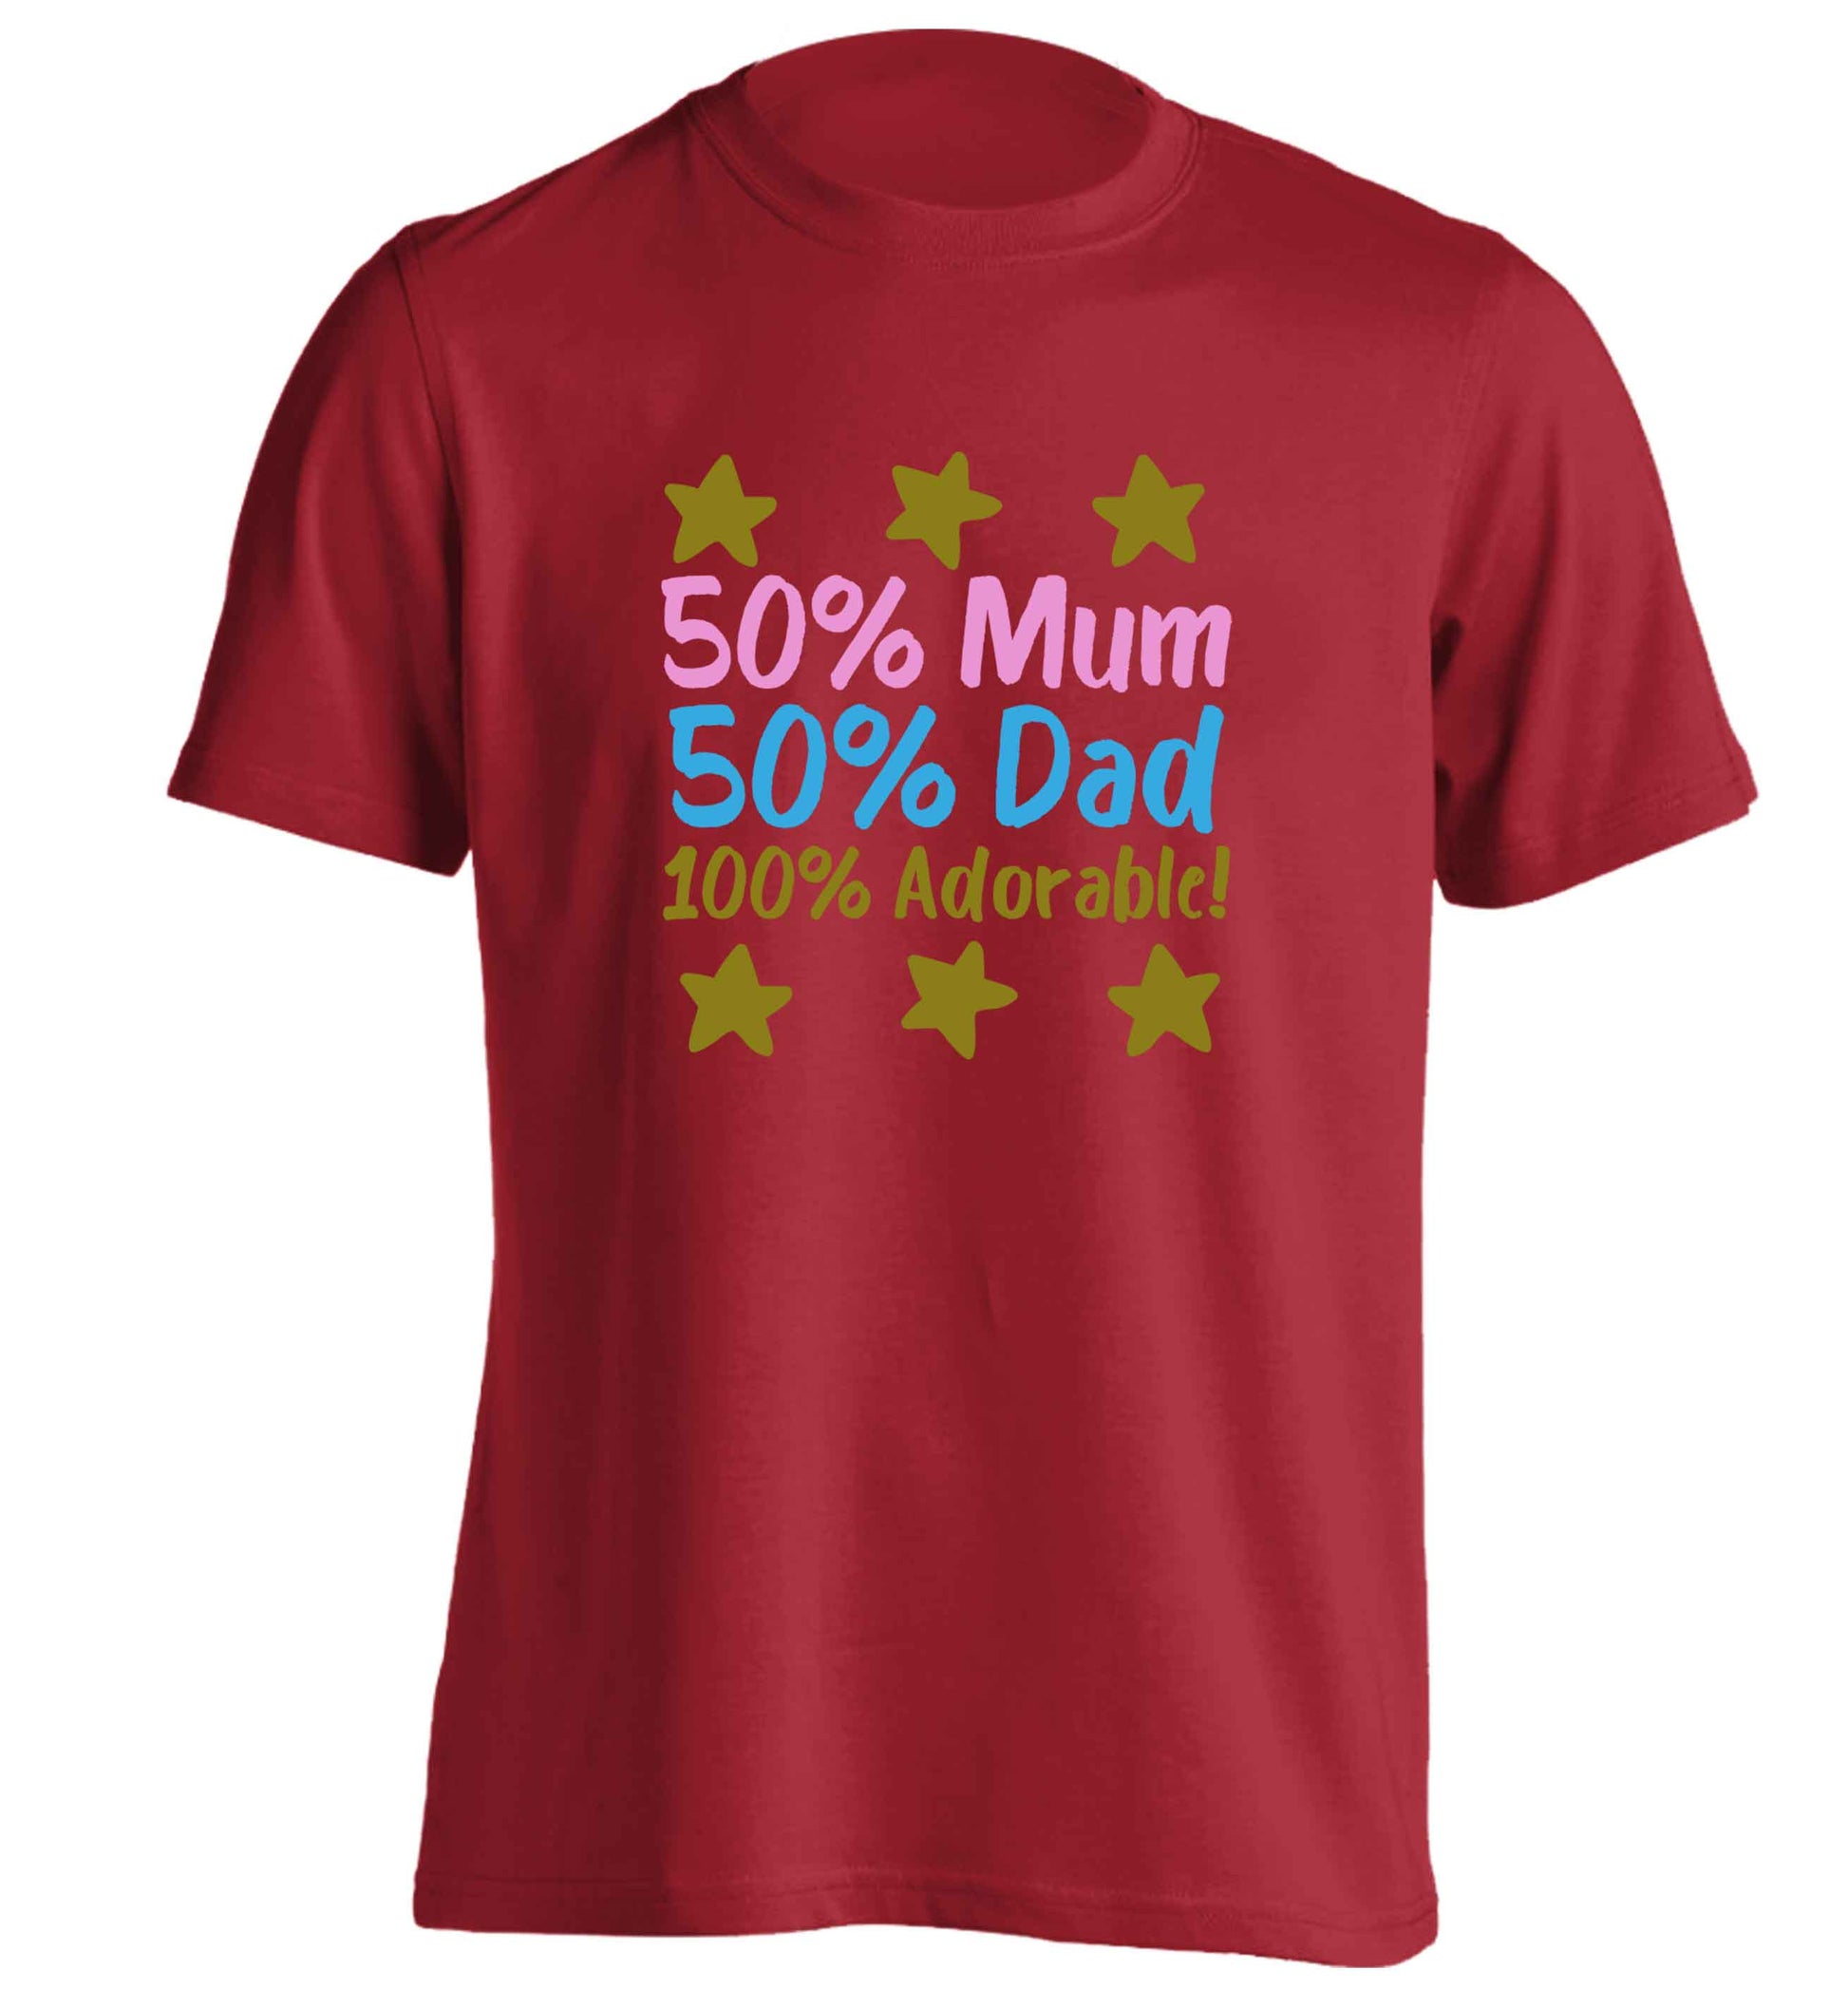 50% mum 50% dad 100% adorable adults unisex red Tshirt 2XL